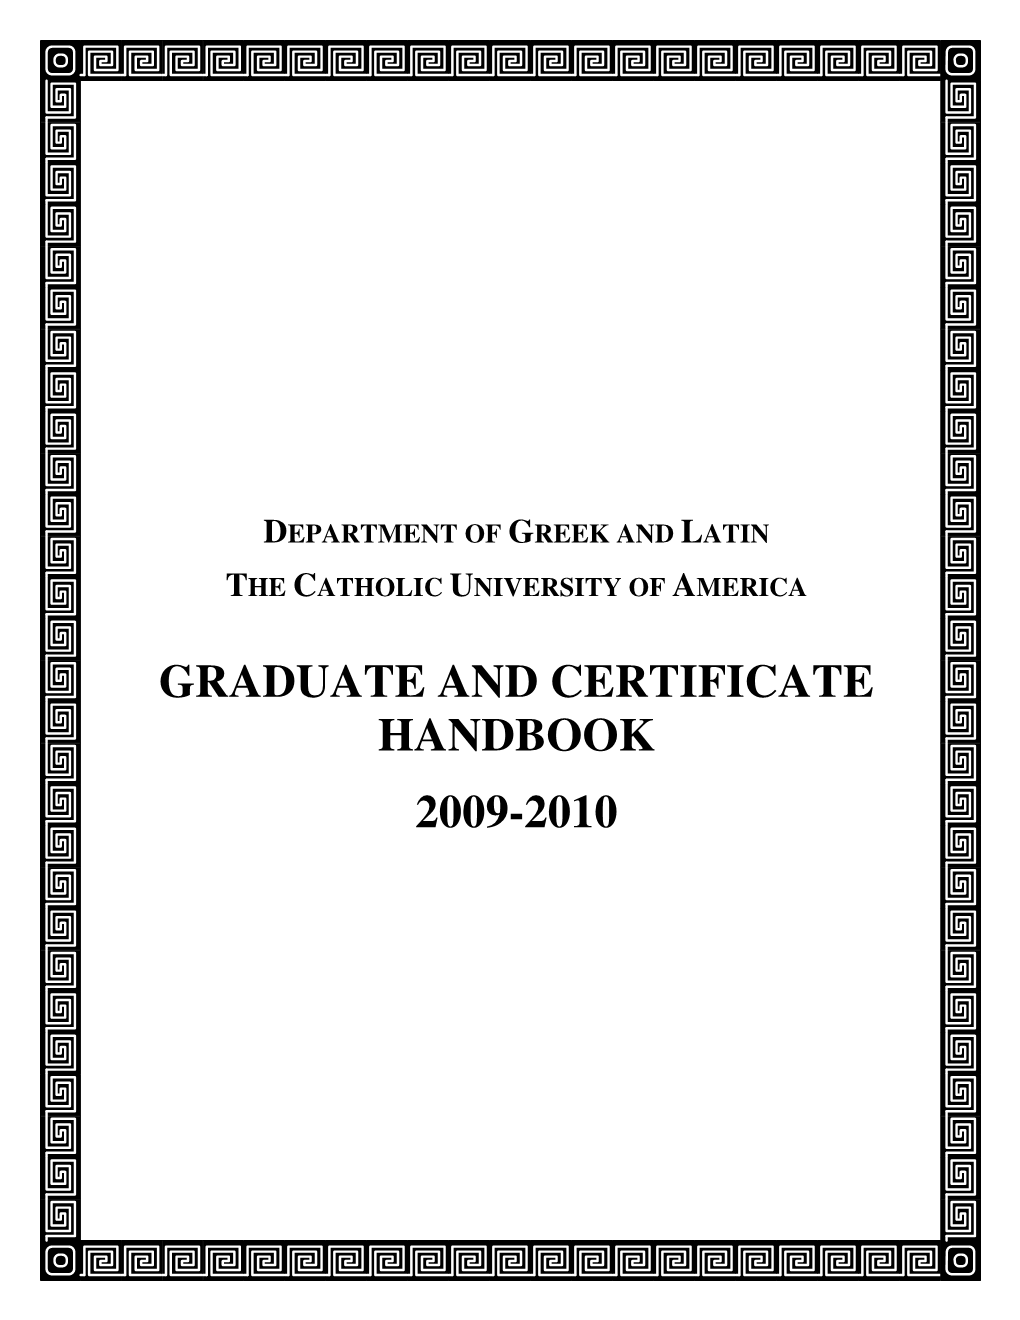 Graduate and Certificate Handbook, 2009-10